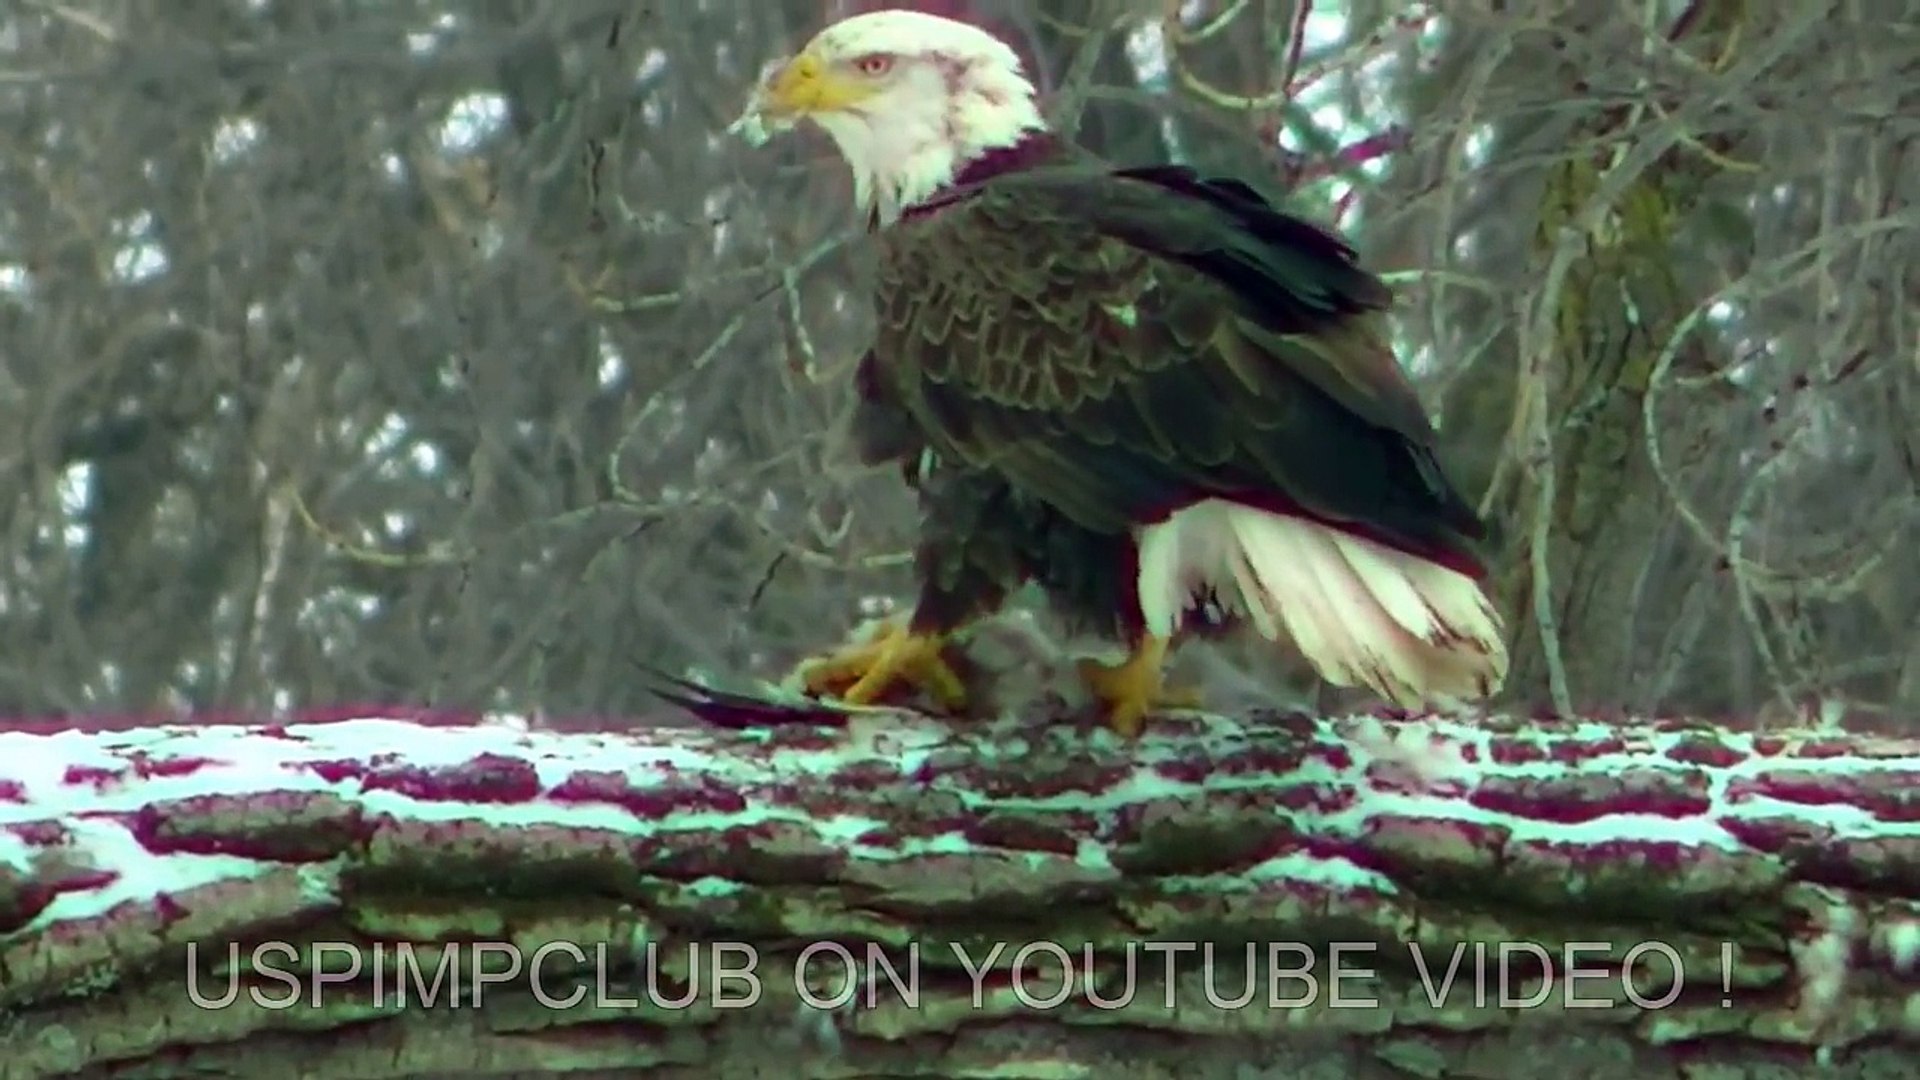 Rare: American Bald Eagles Kills Duck (CAUGHT ON TAPE)